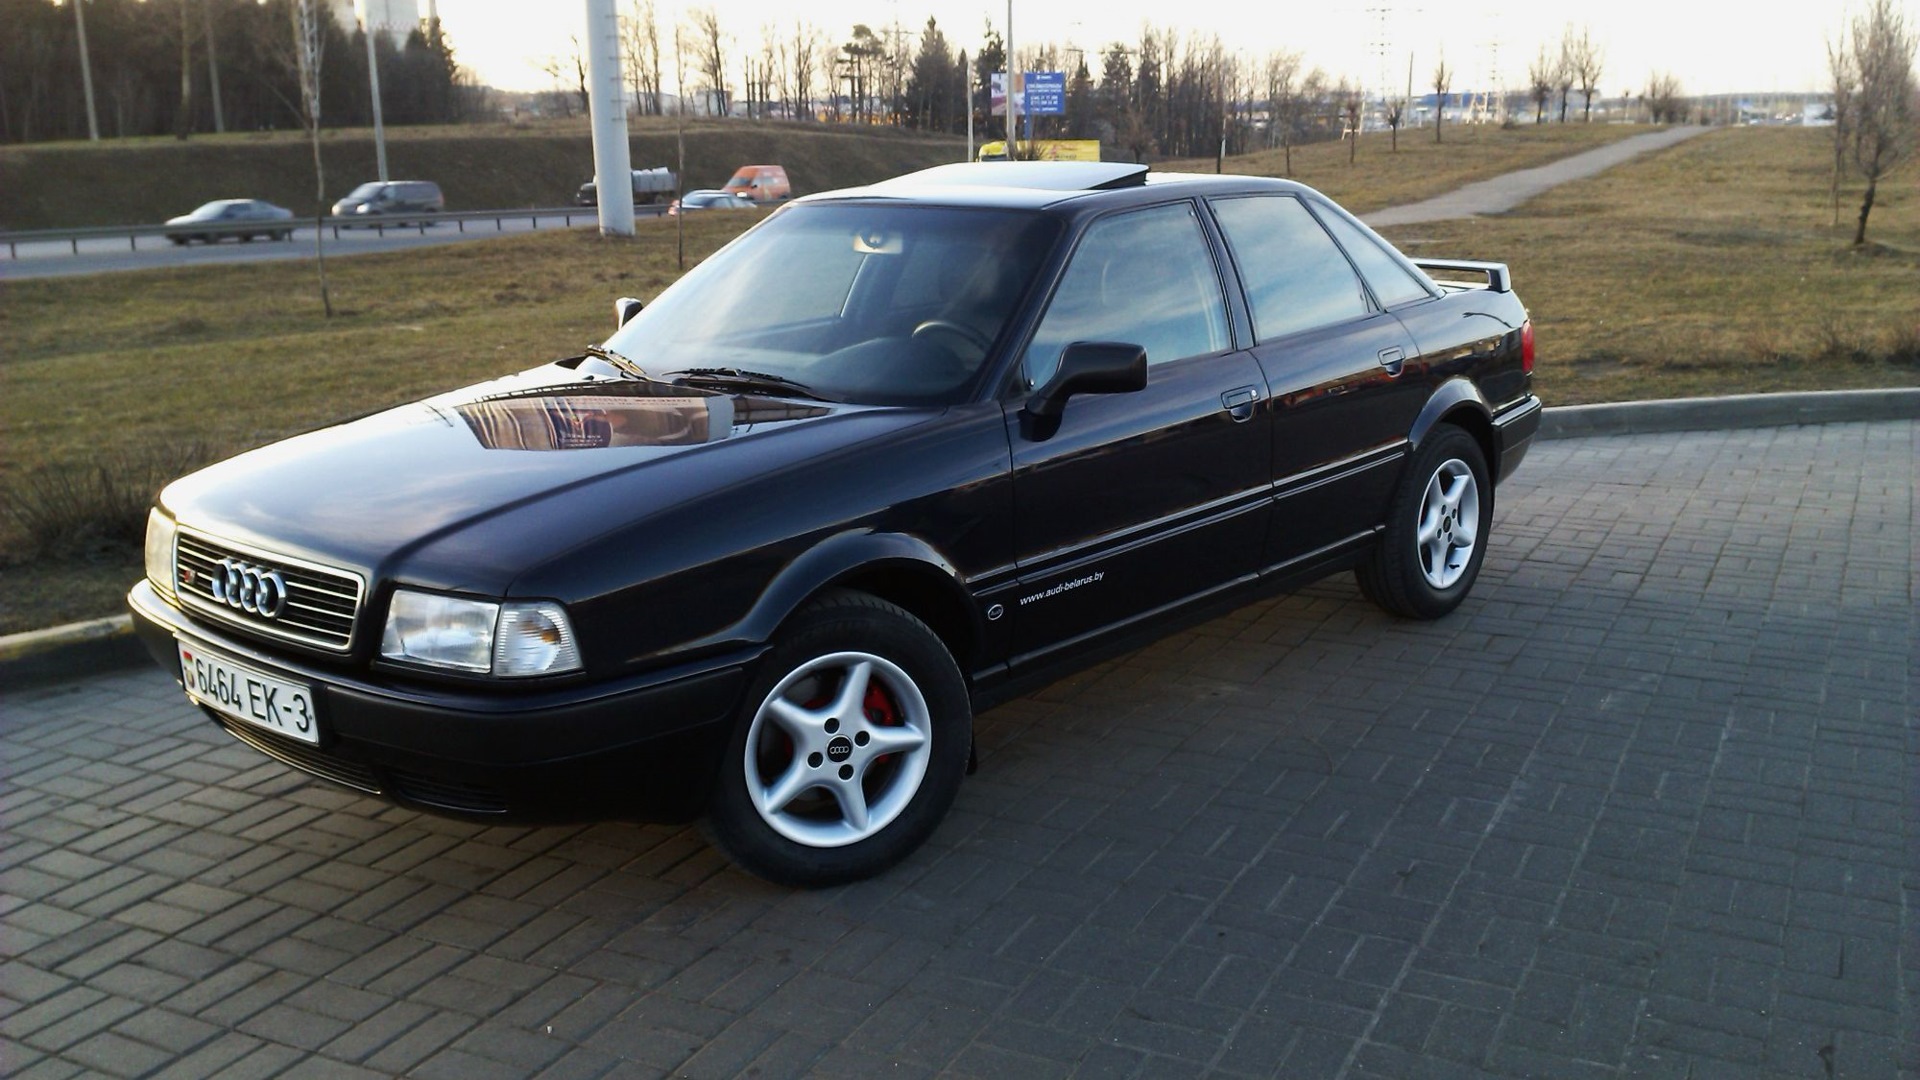 Купить ауди б4 в белоруссии. Audi 80 b4 1994. Audi 80 b4 Black. Audi 80 b4 черная. Ауди 80 б4 черная.